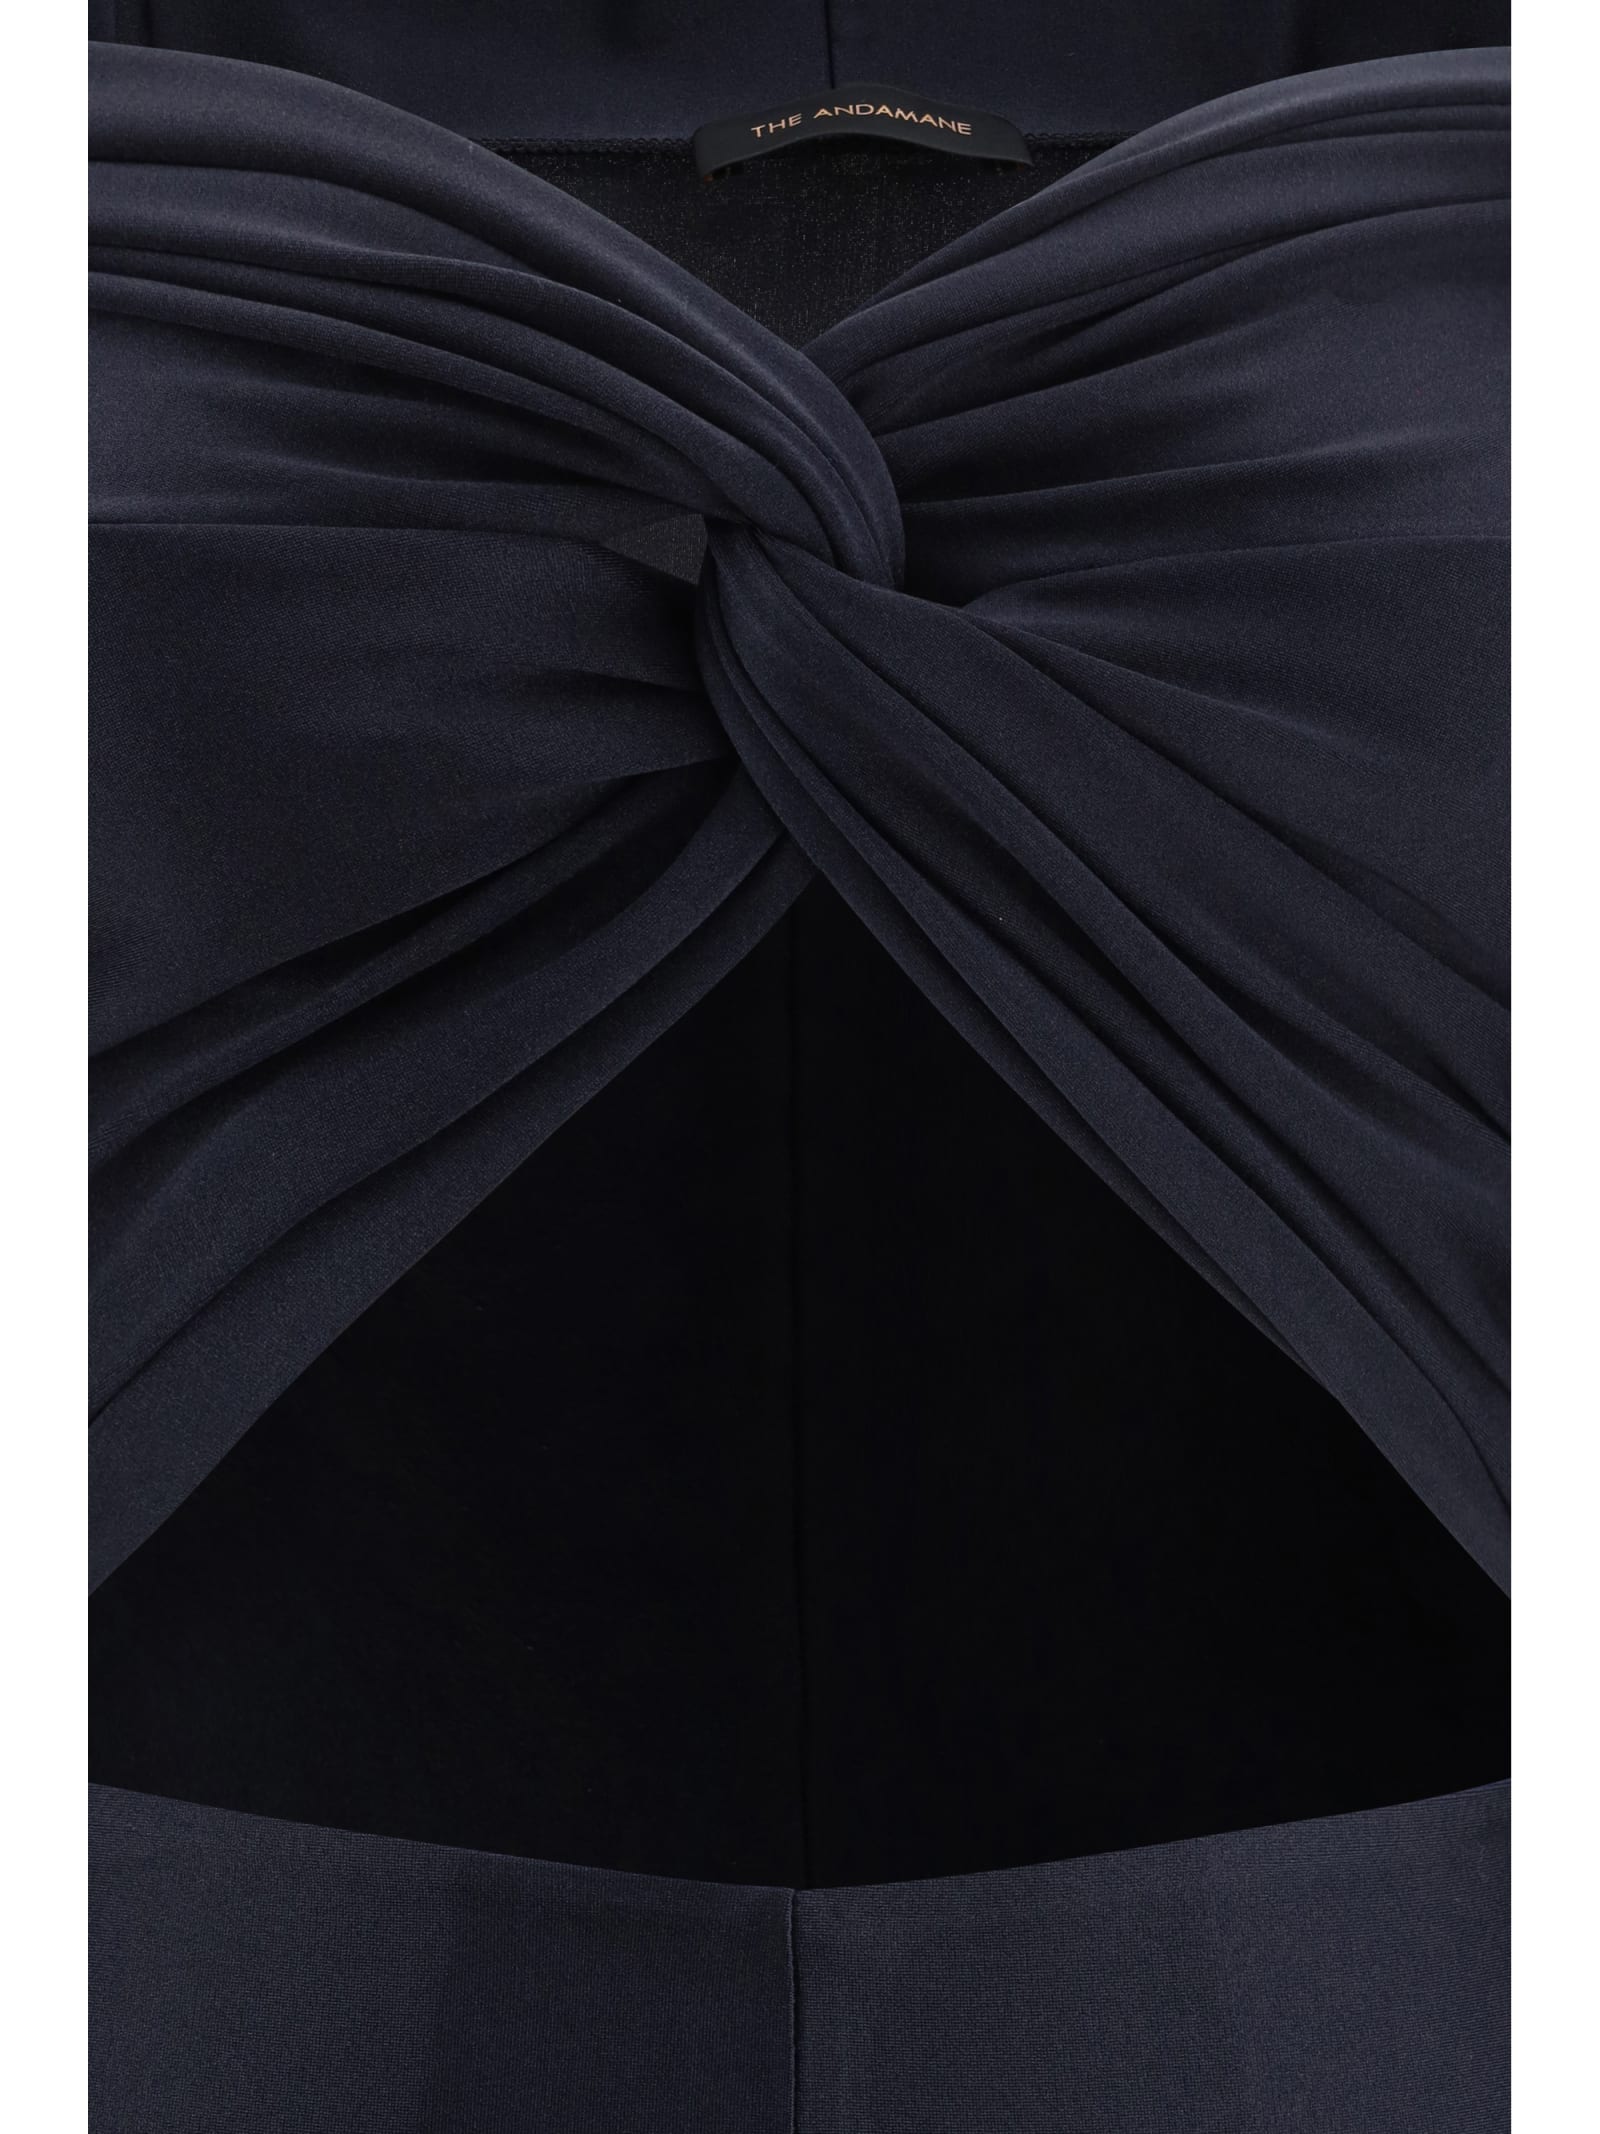 Shop The Andamane Jumpsuit Dress In Black